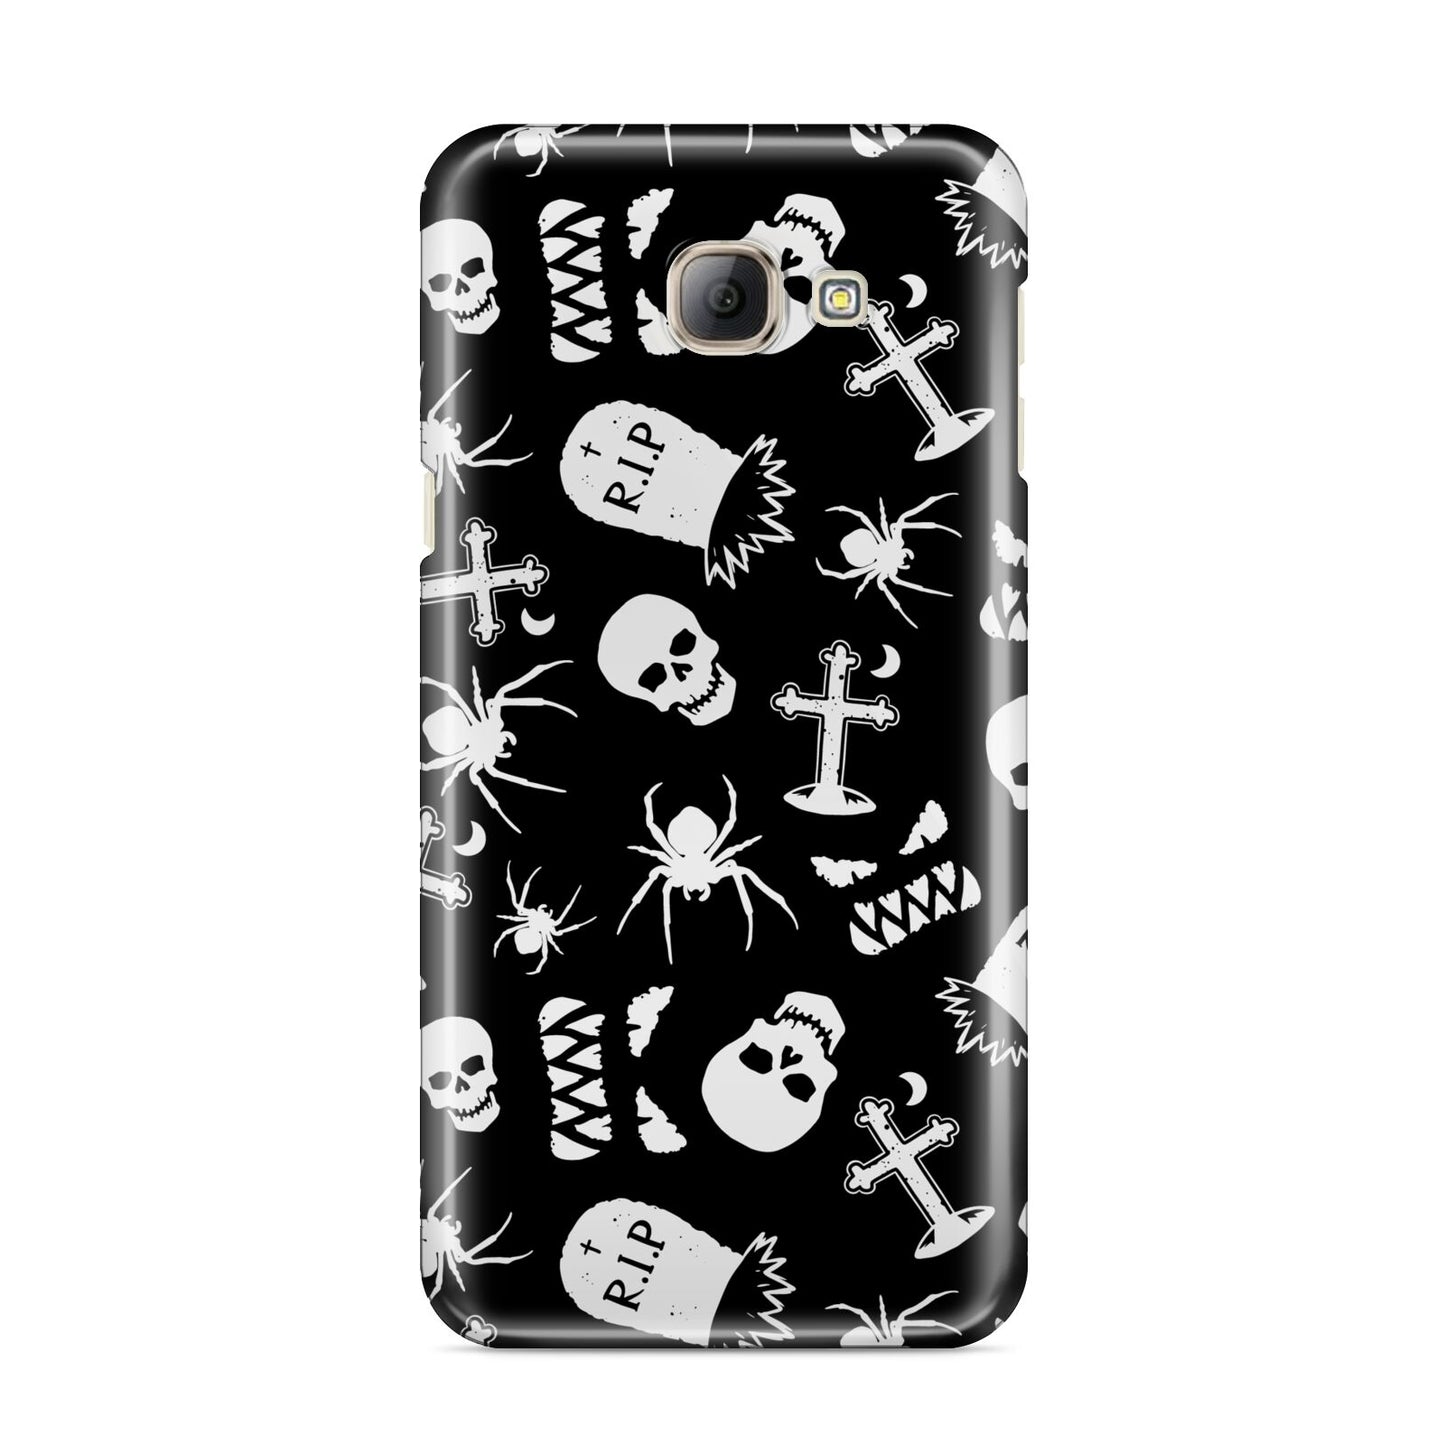 Spooky Illustrations Samsung Galaxy A8 2016 Case